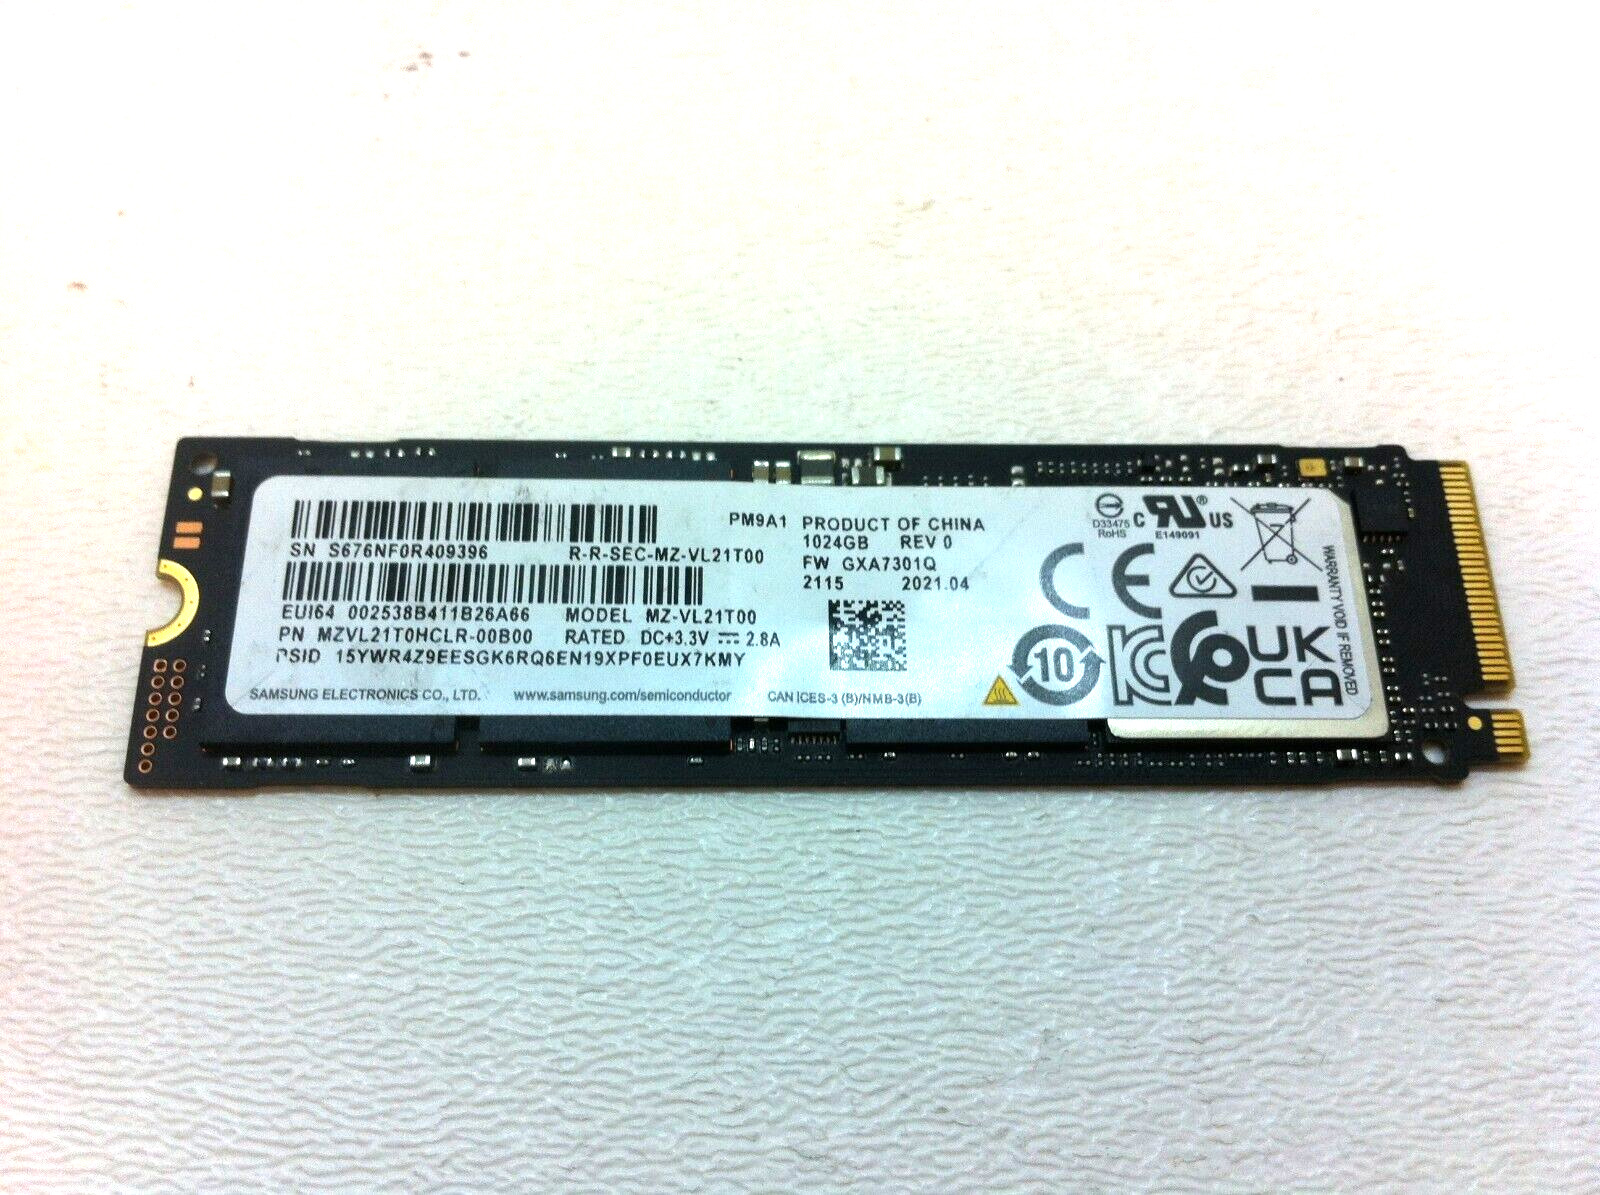 Asus Zenbook UN5401R Samsung MZ-VL21T00 1TB PCIe NVMe SSD MZVL21T0HCLR-00B00 236